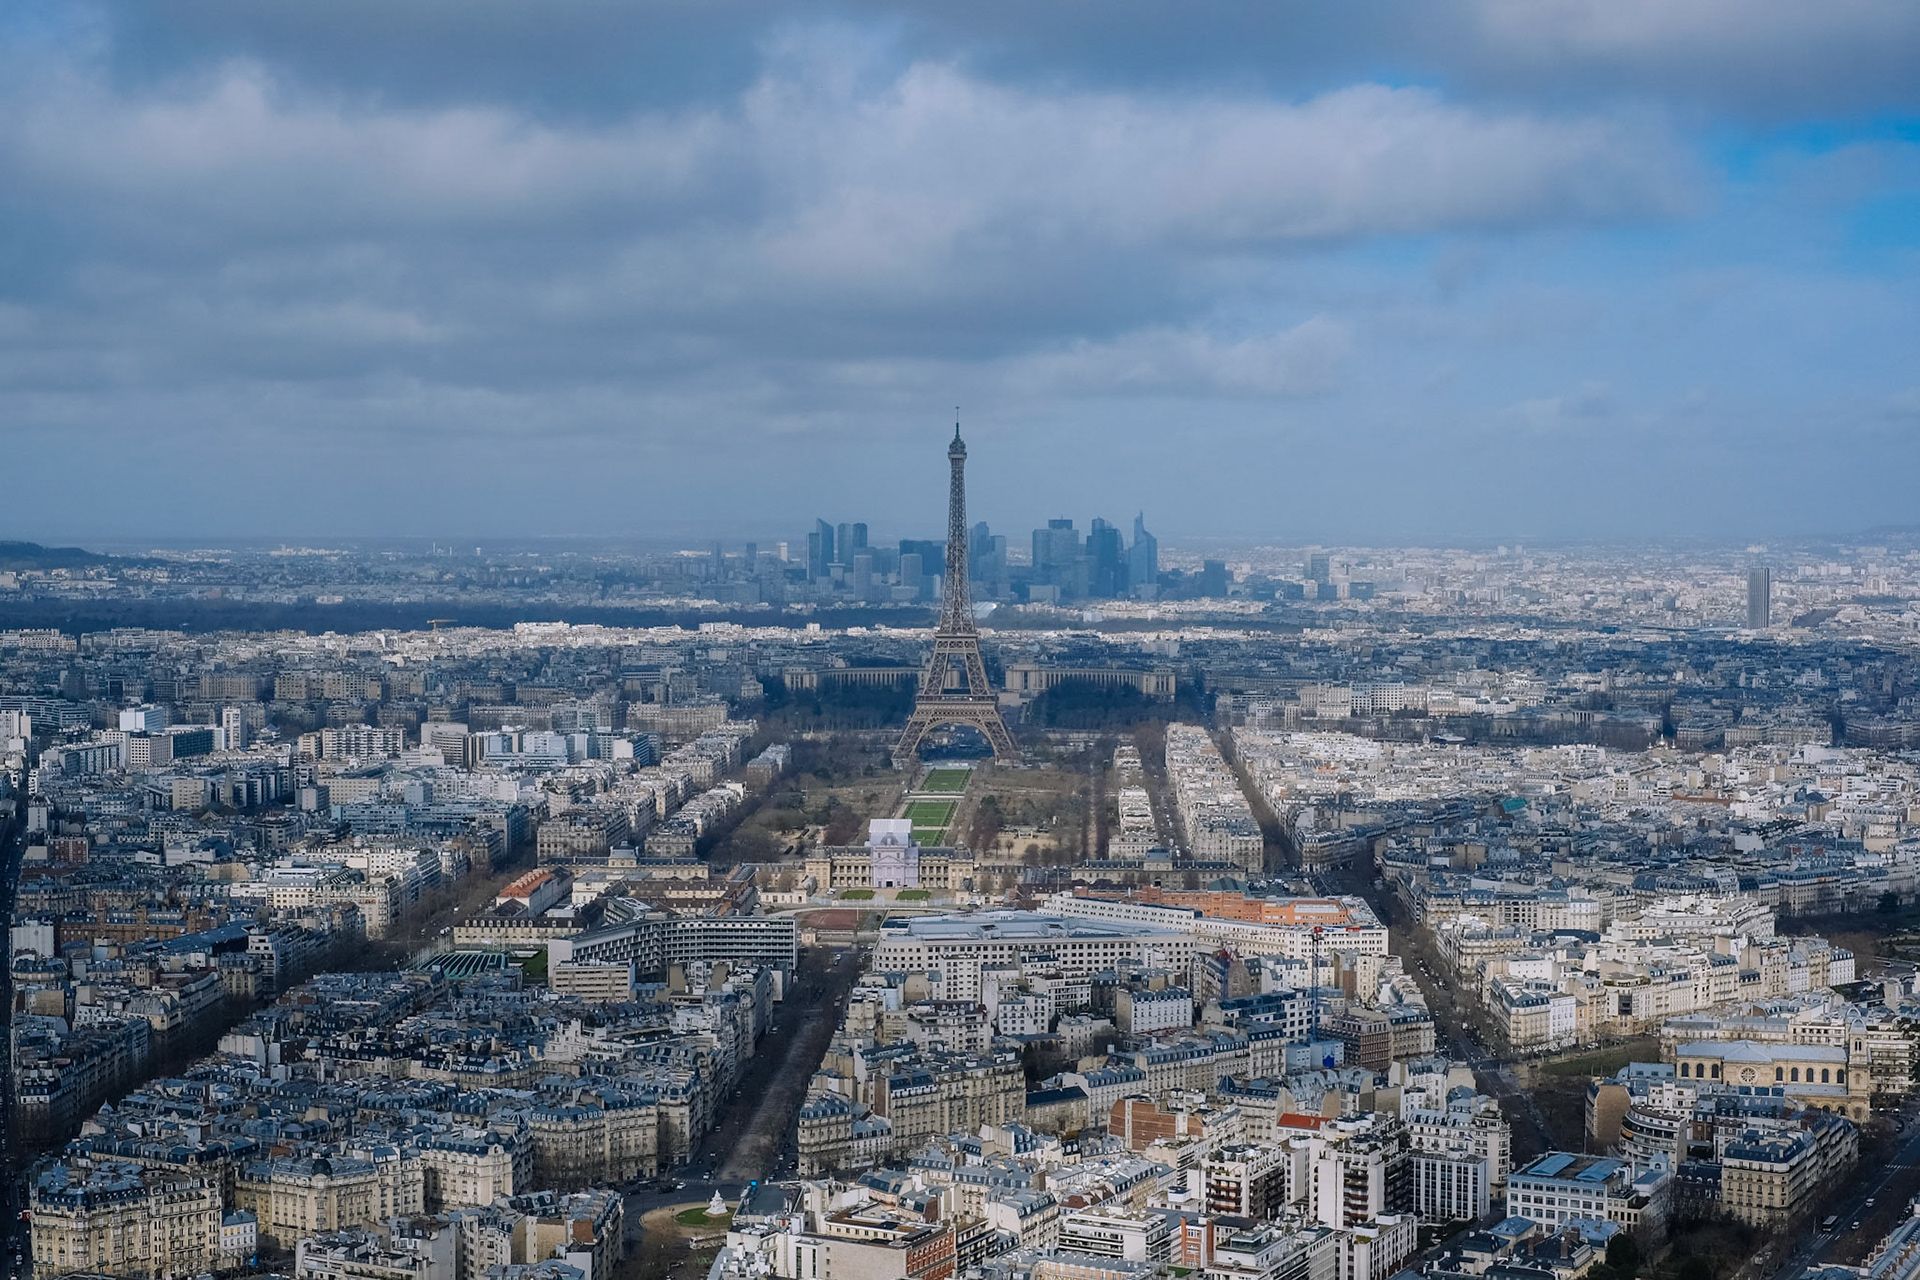 Paris from the air